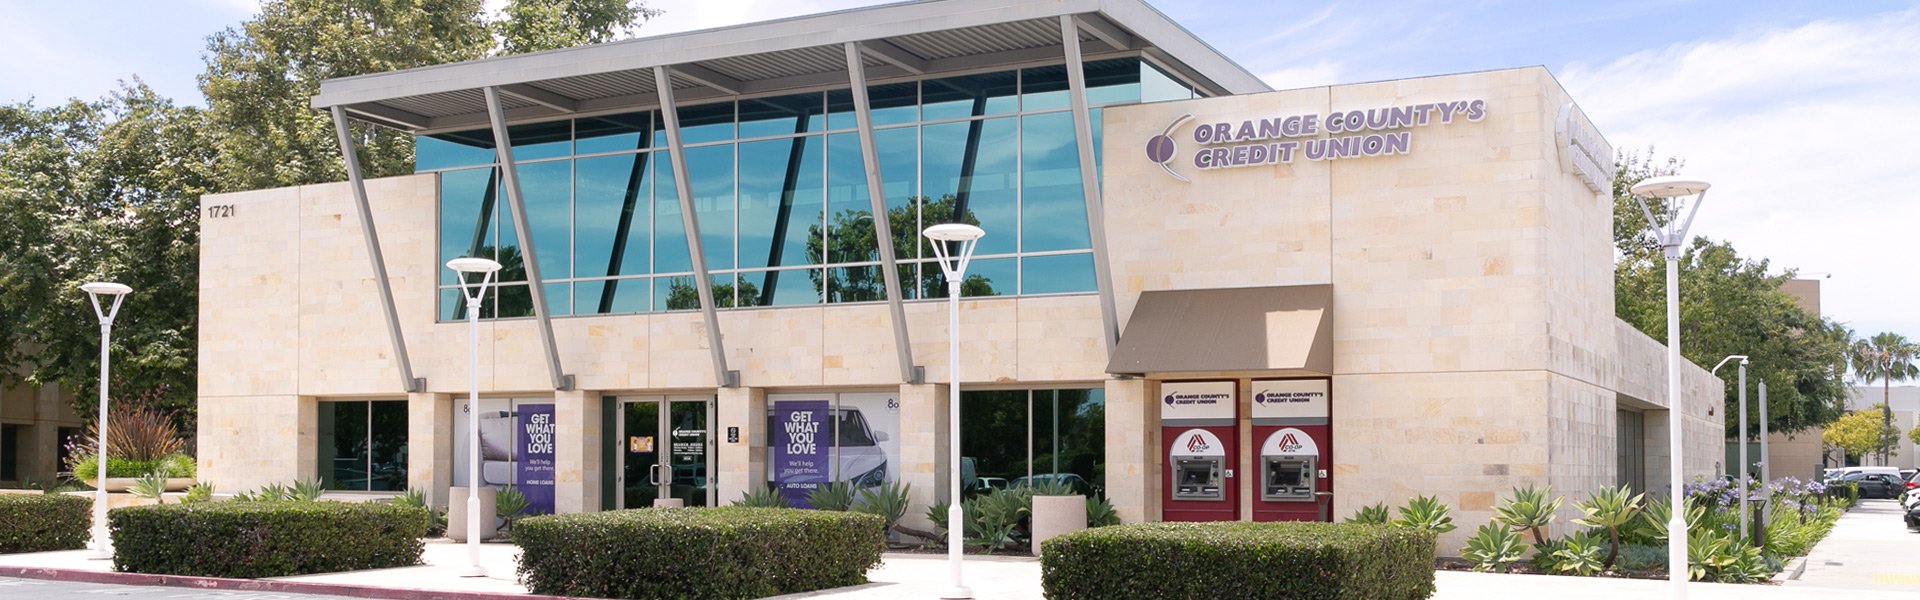 Photo of Orange County's Credit Union in Santa Ana